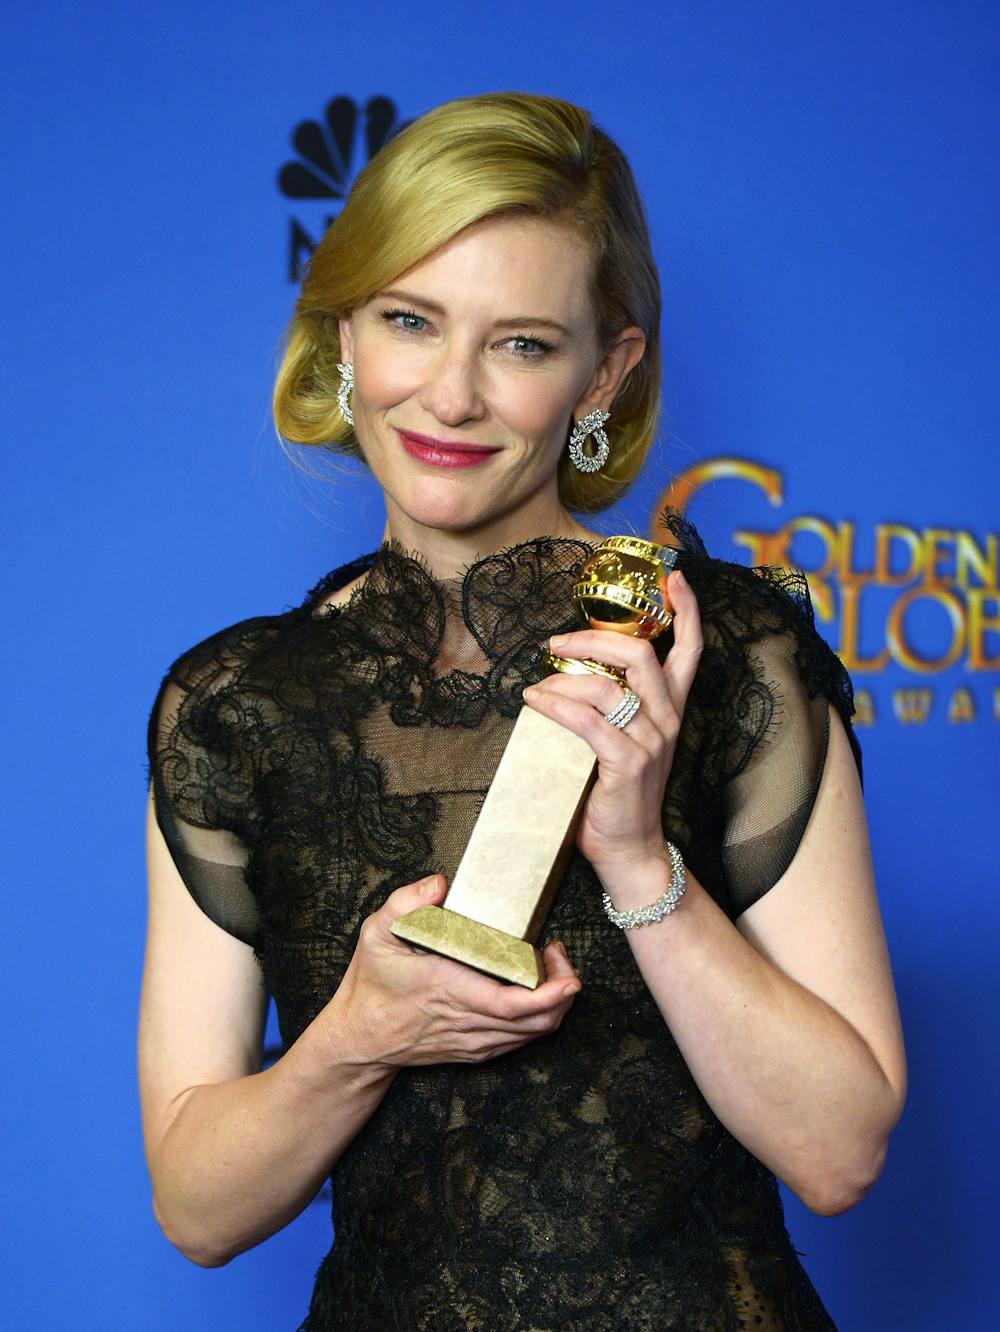 Cate Blanchett's road to stardom